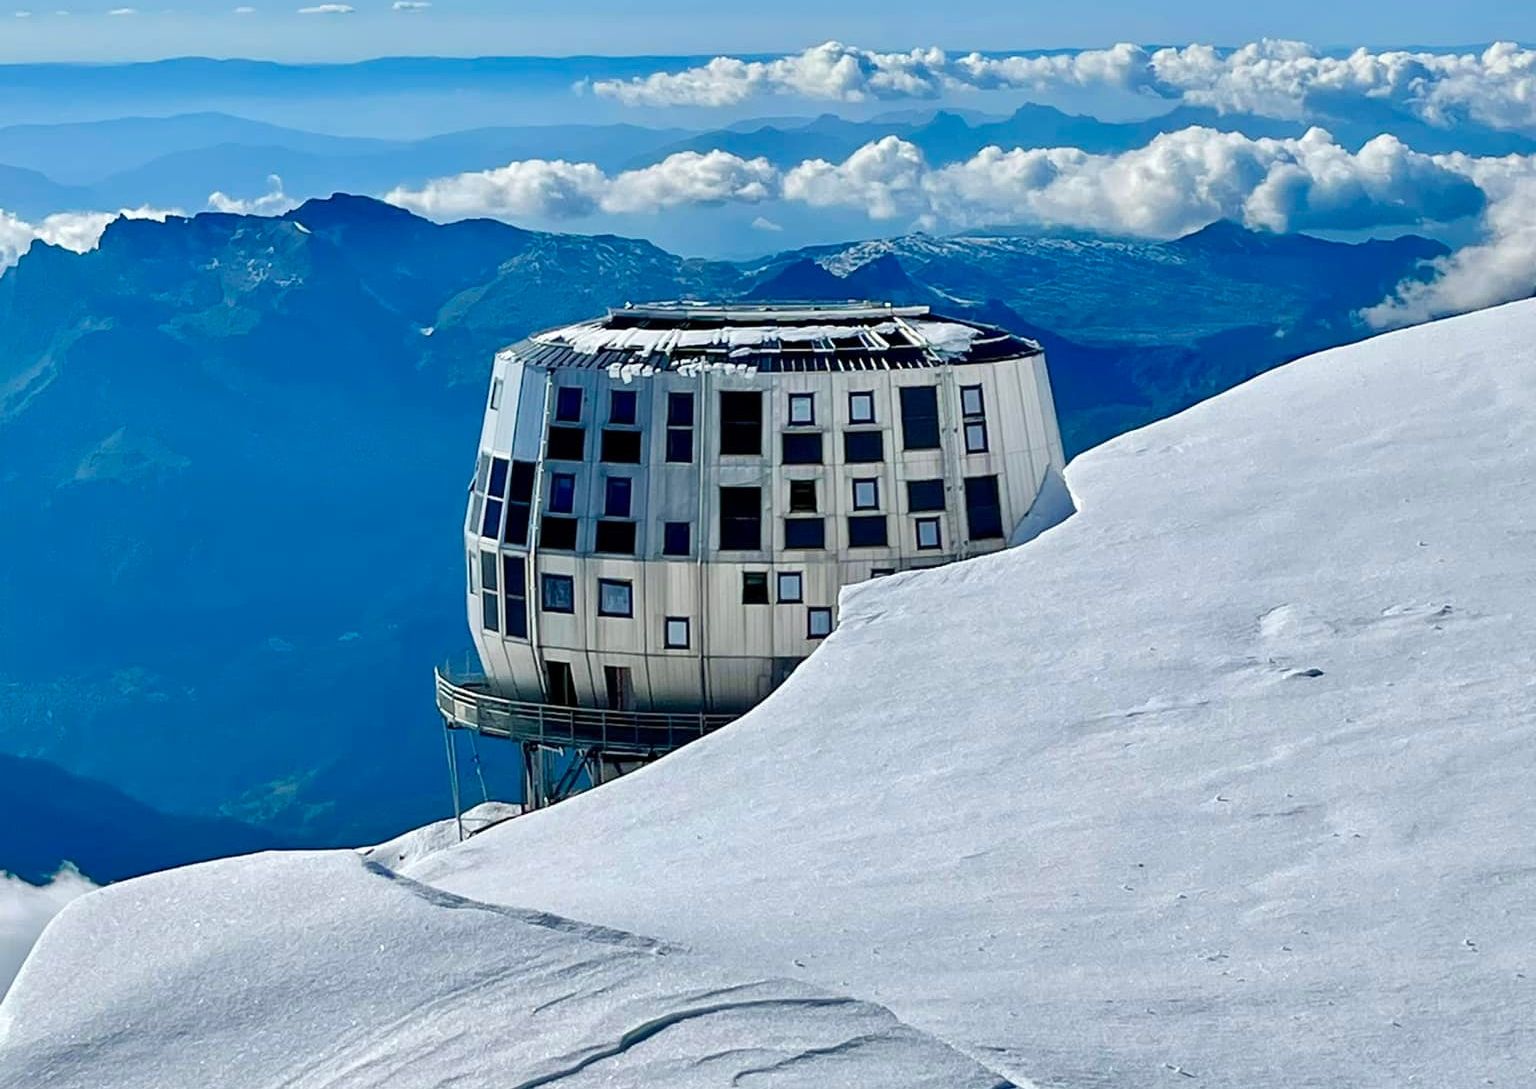 Refuge du Gouter on Normal route of ascent on Mont Blanc